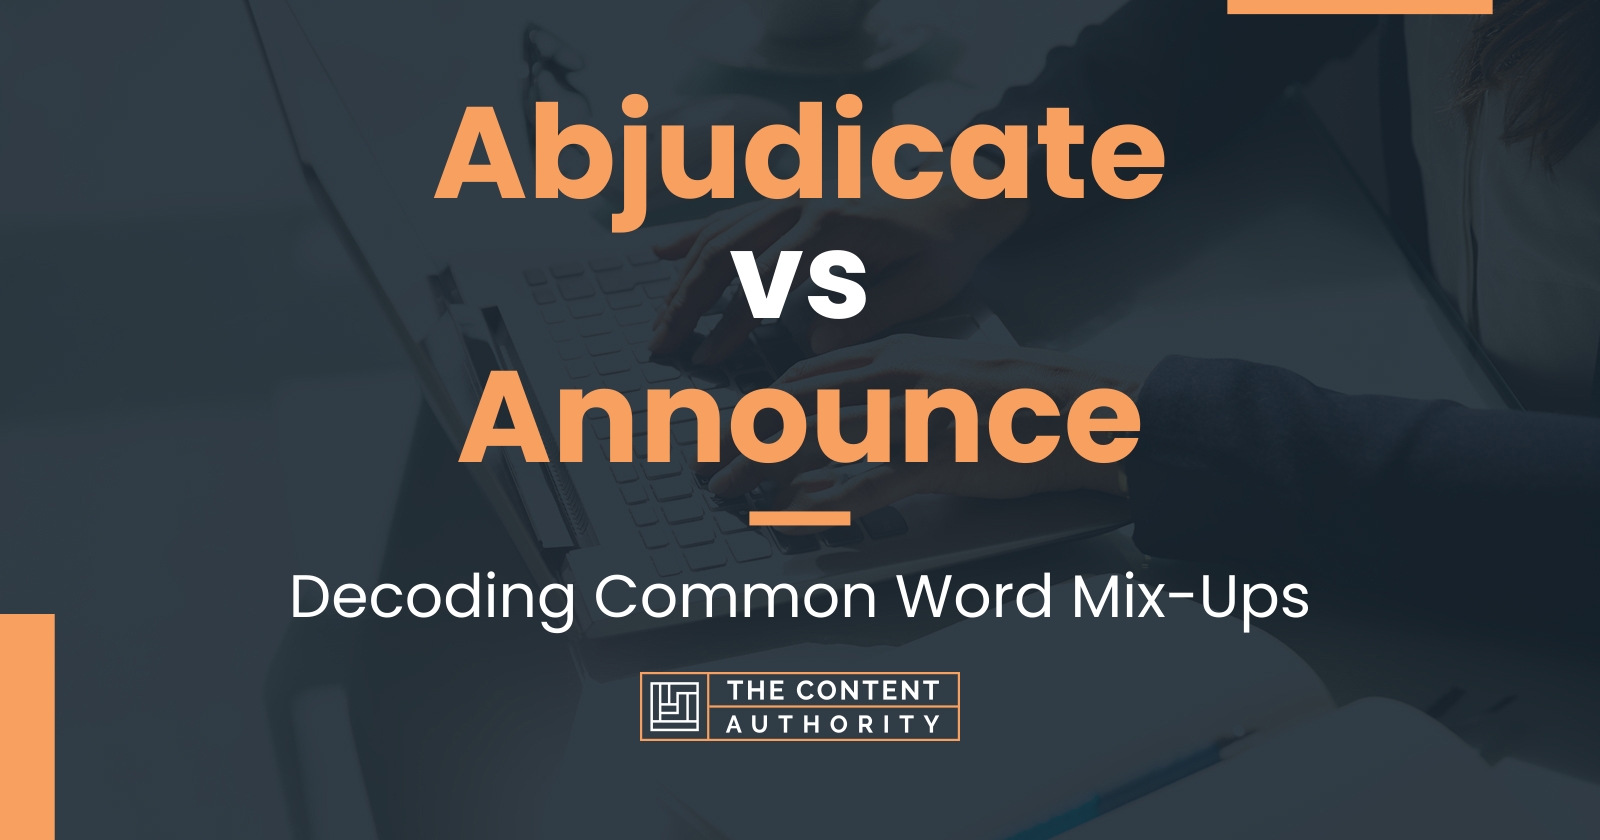 Abjudicate vs Announce: Decoding Common Word Mix-Ups